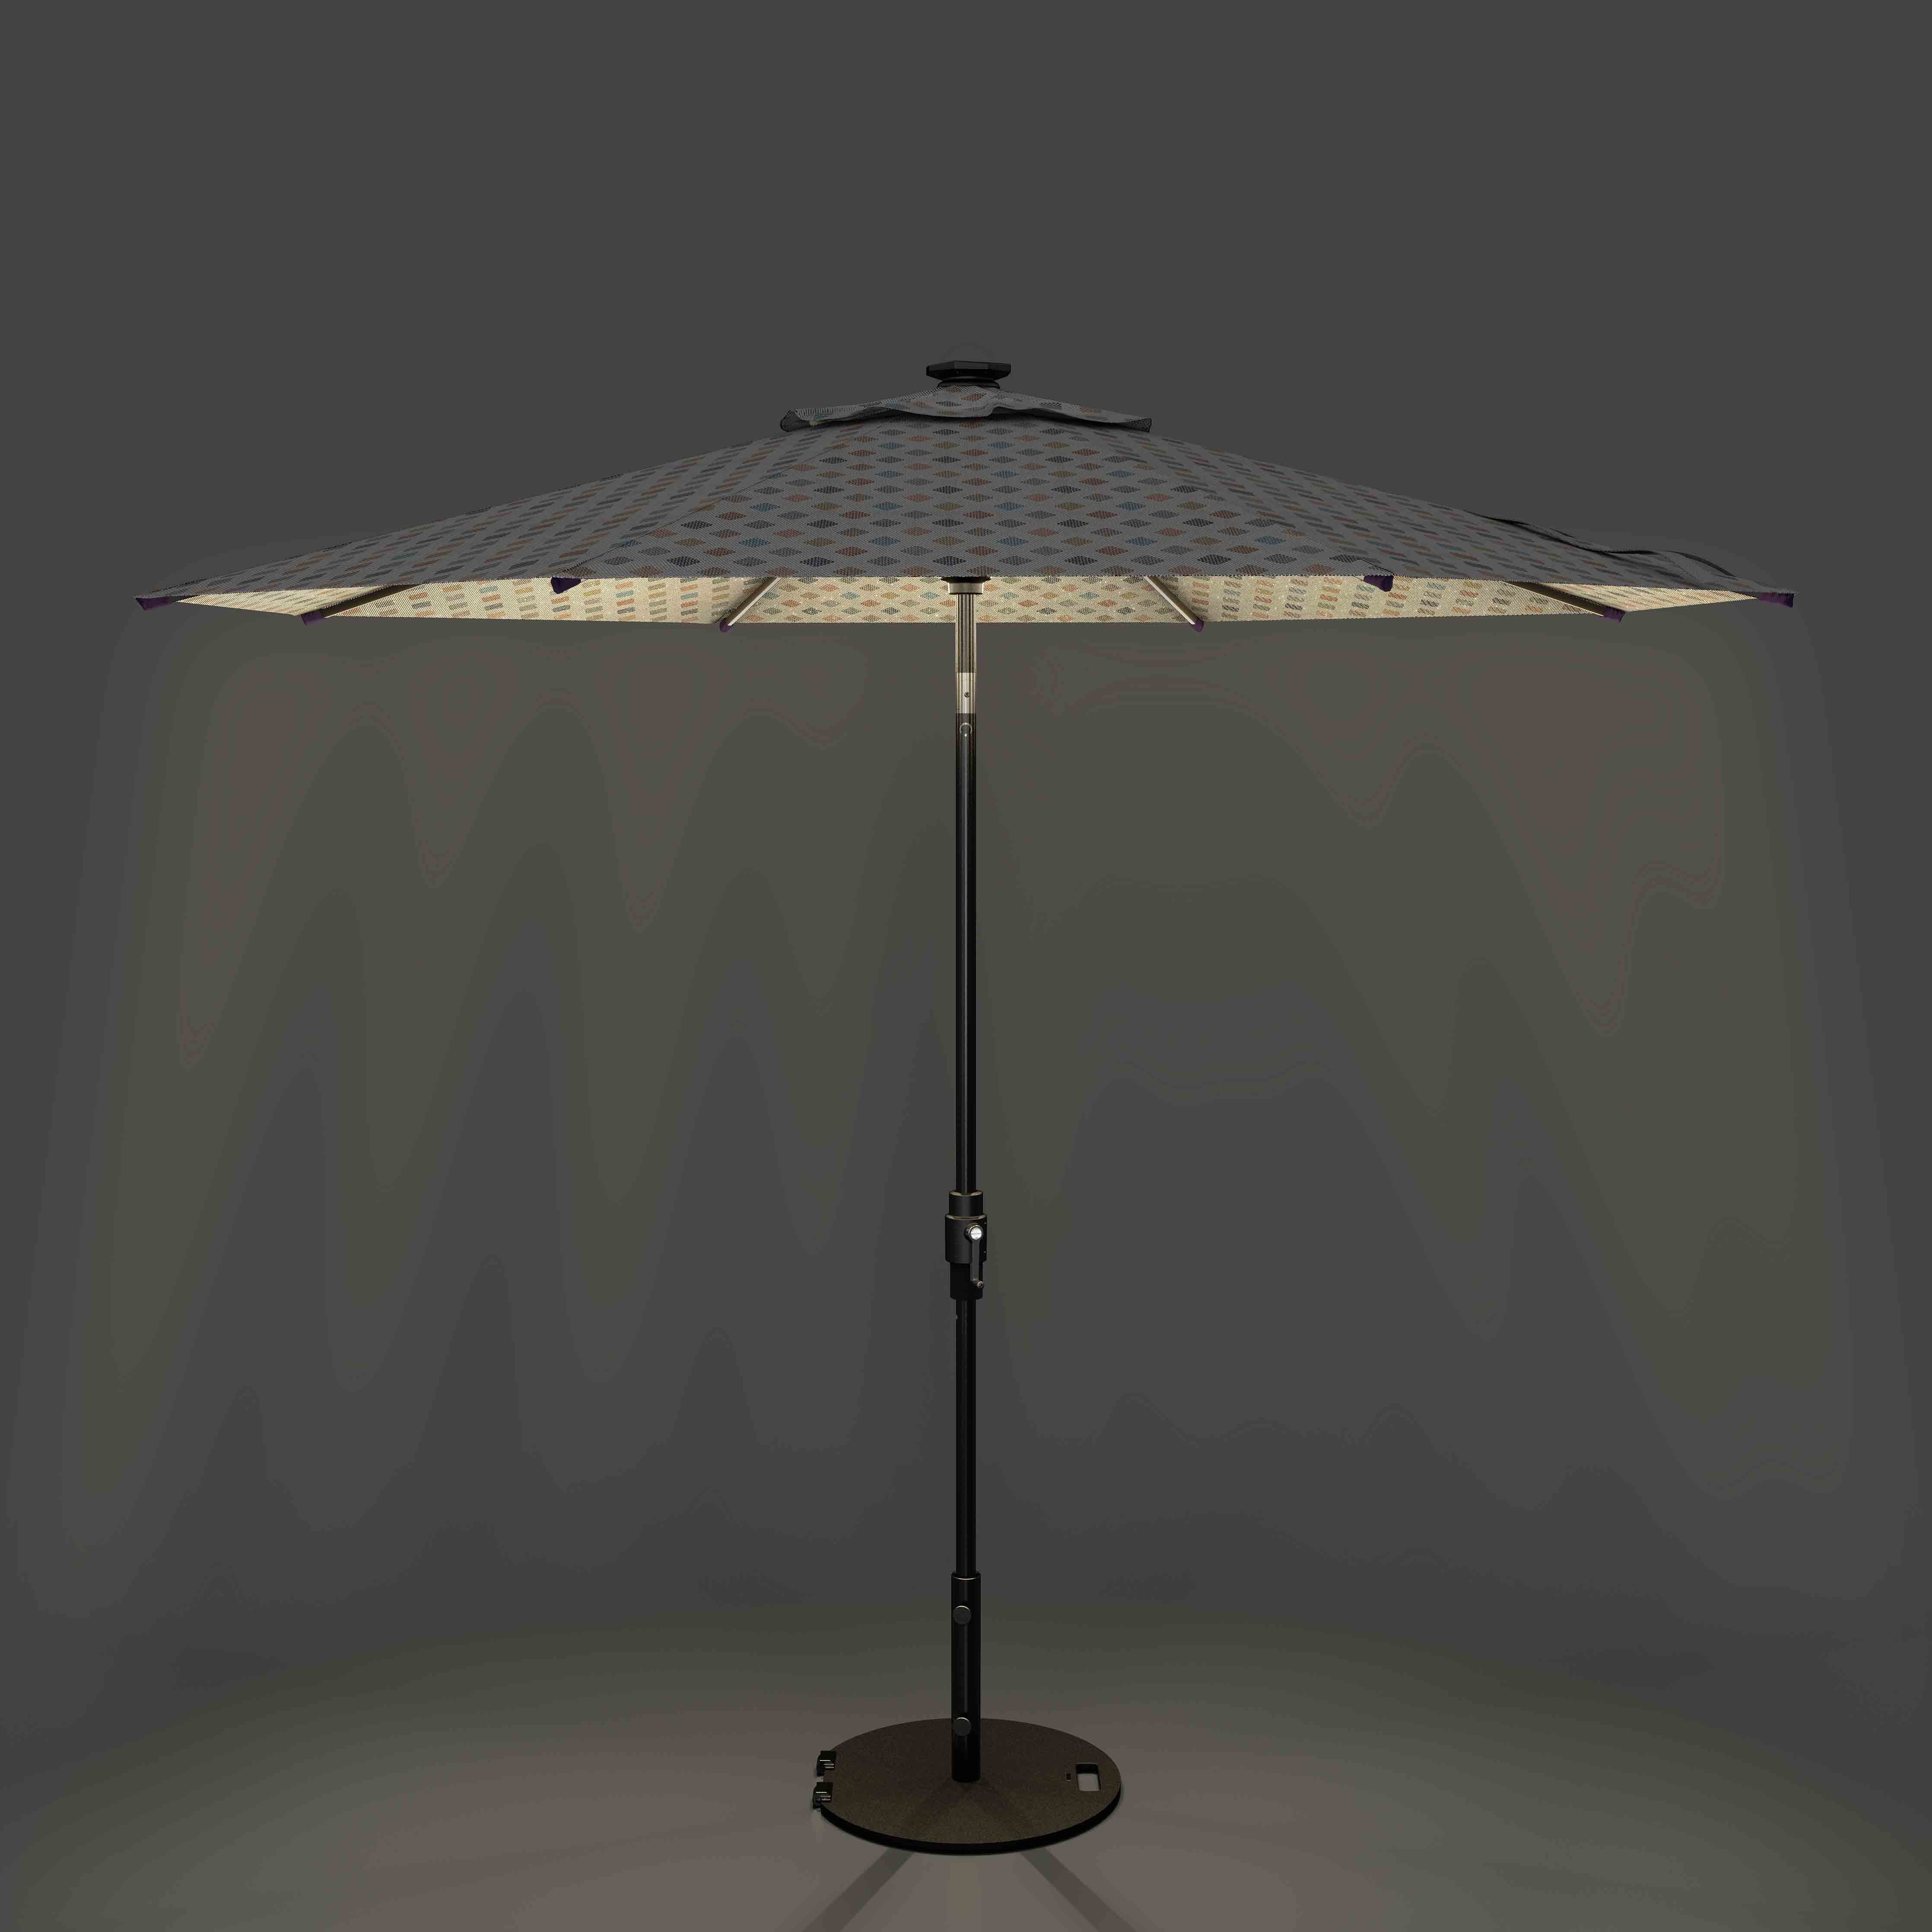 The LED Swilt™ - Sunbrella Infused Gem